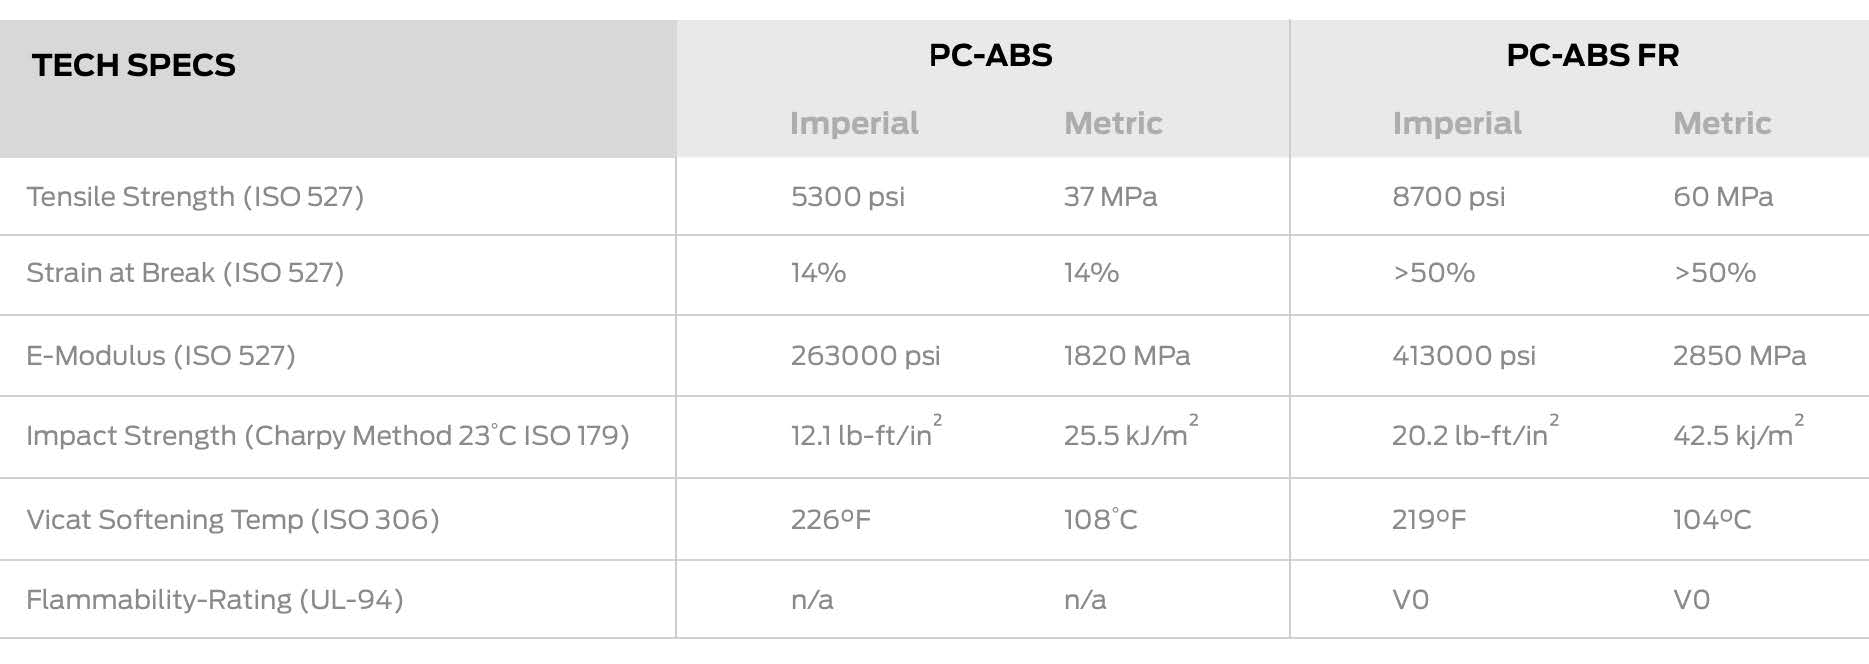 MakerBot PC-ABS TECH SPECS